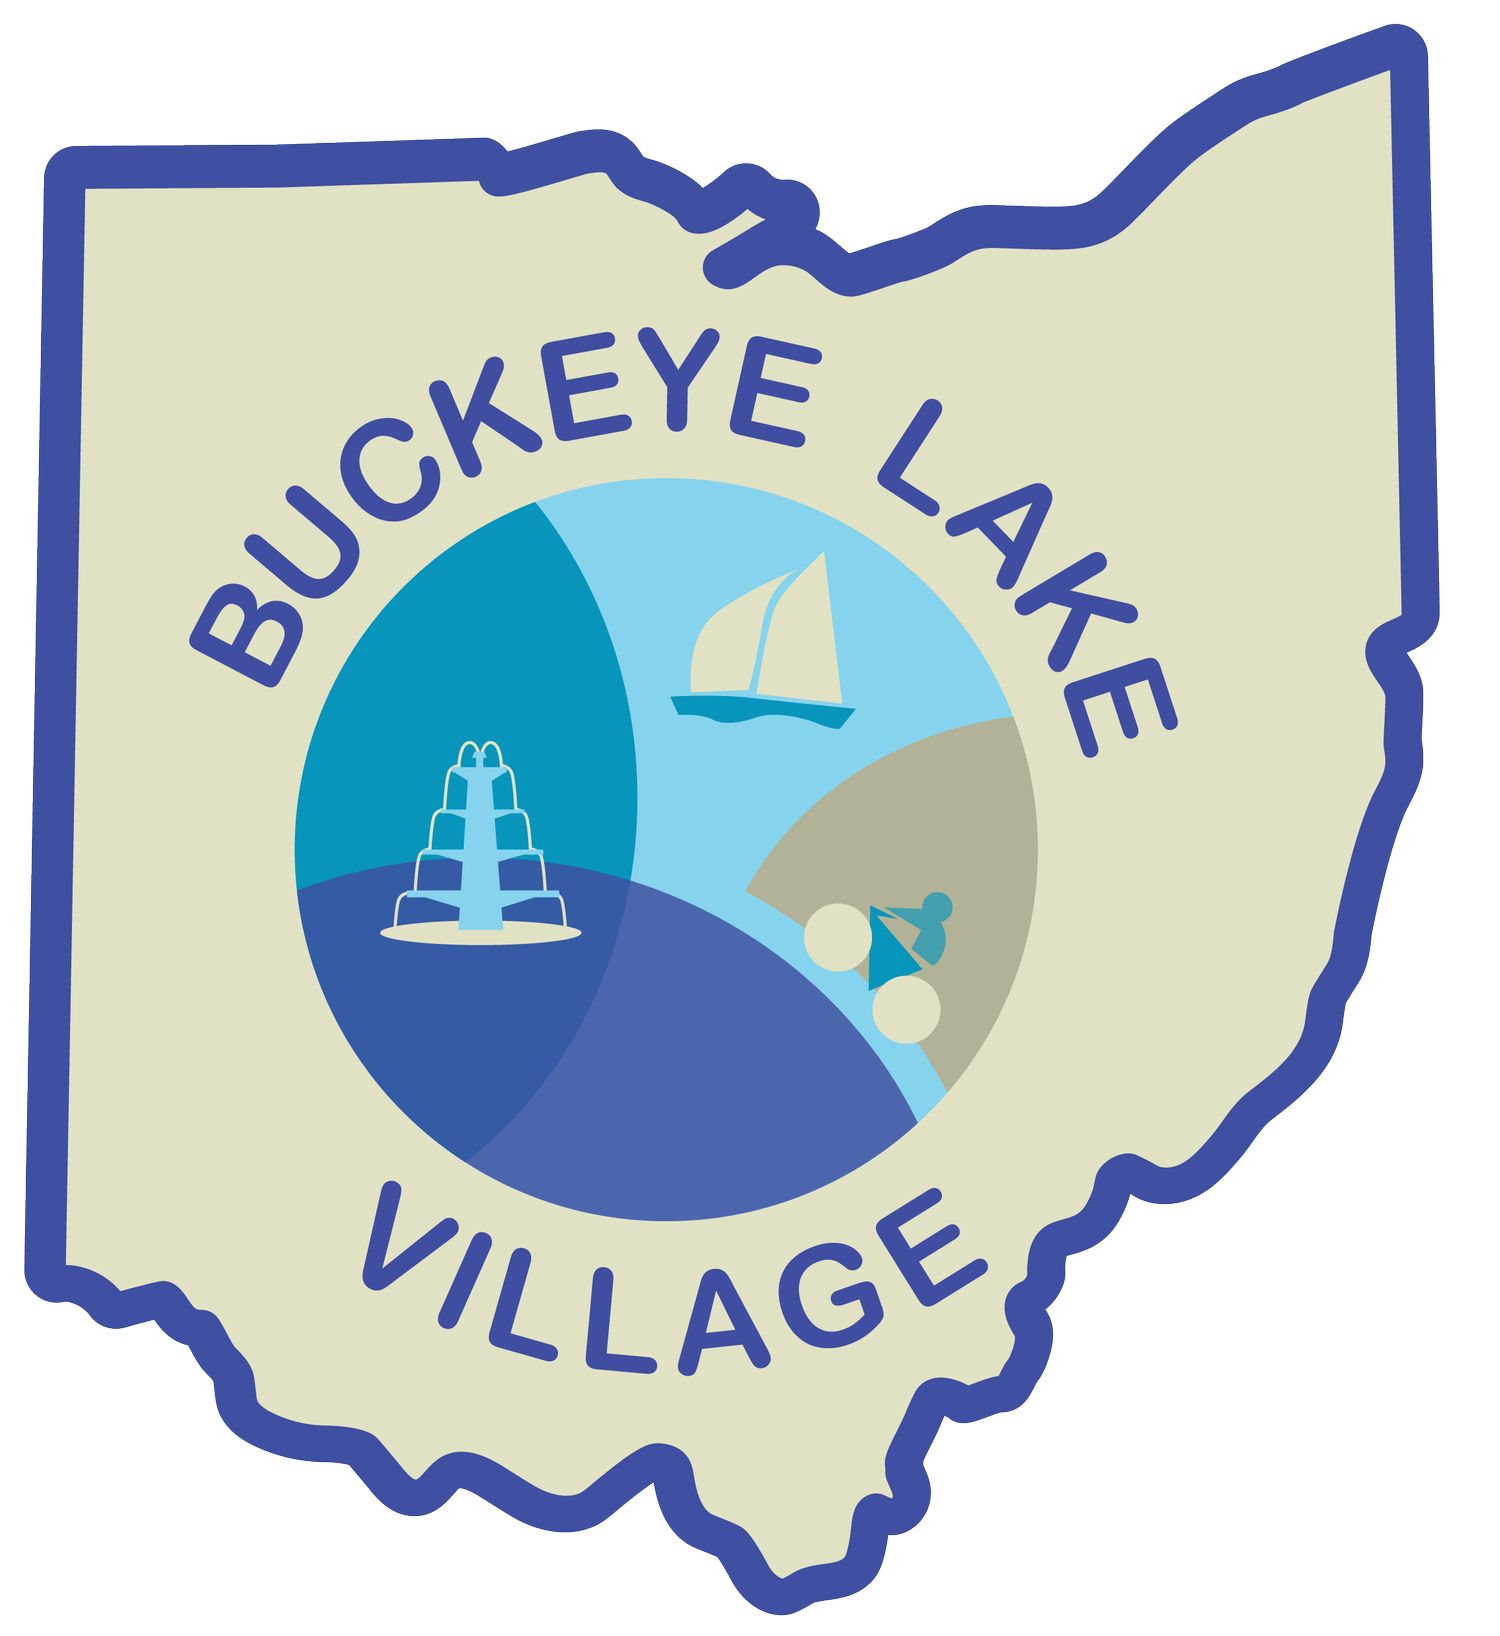 Buckeye Lake Village